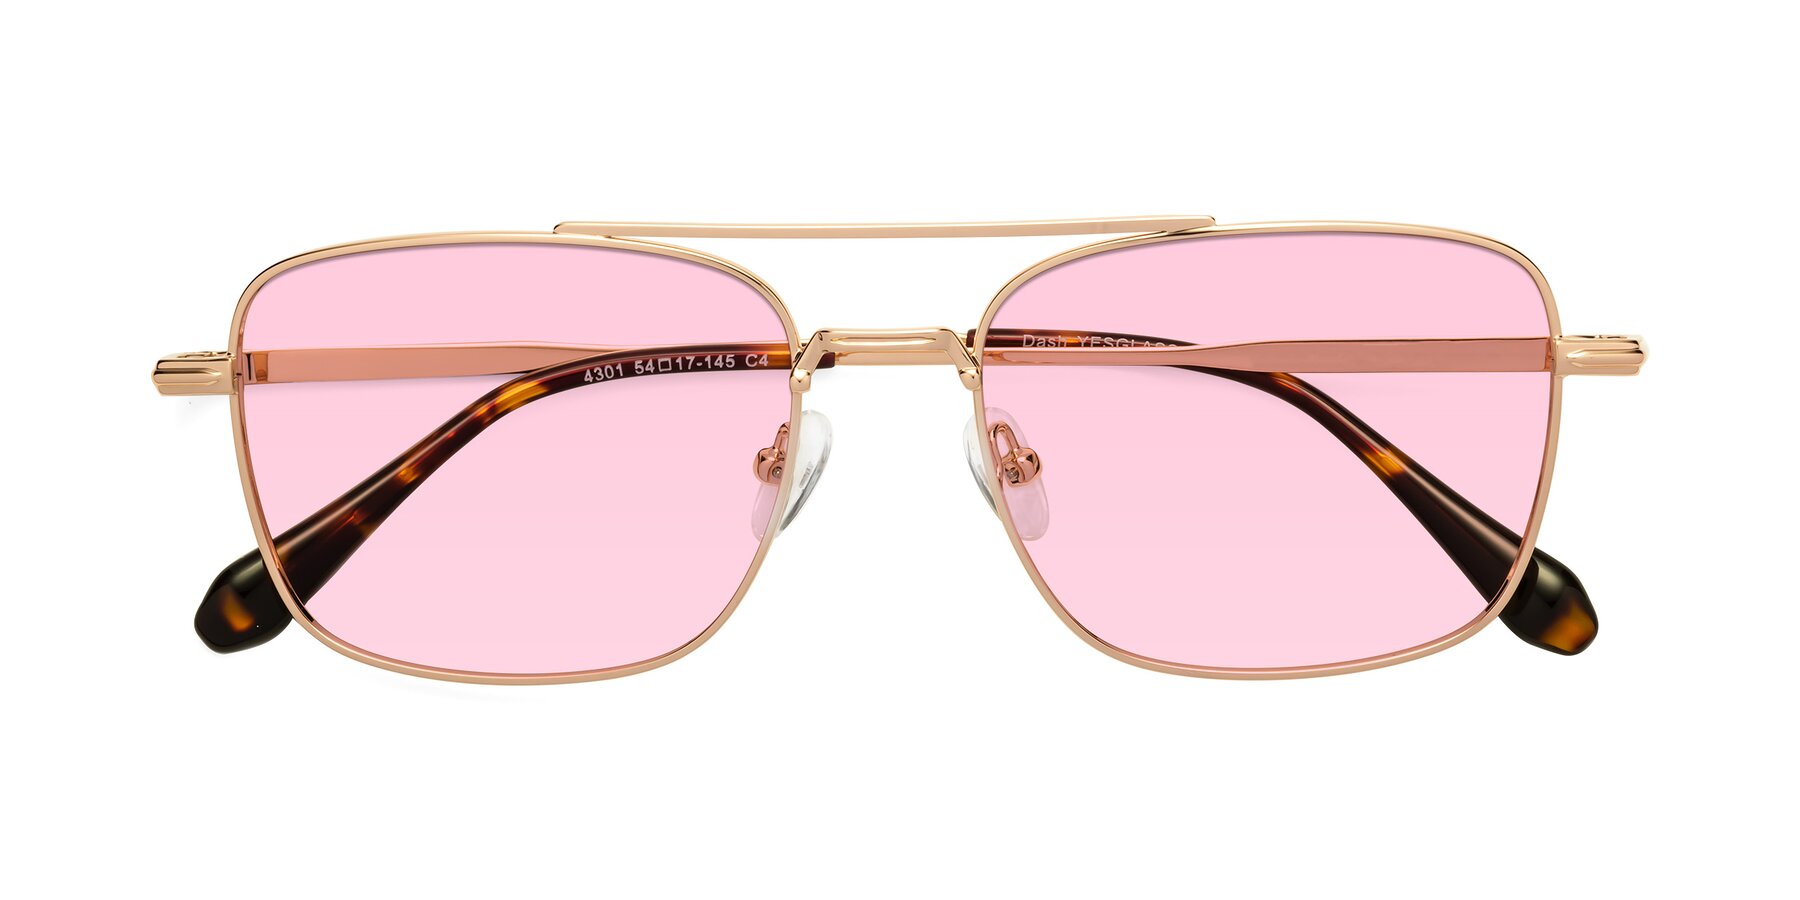 fairfax cateye sunglasses, shiny gold & rose pink tint